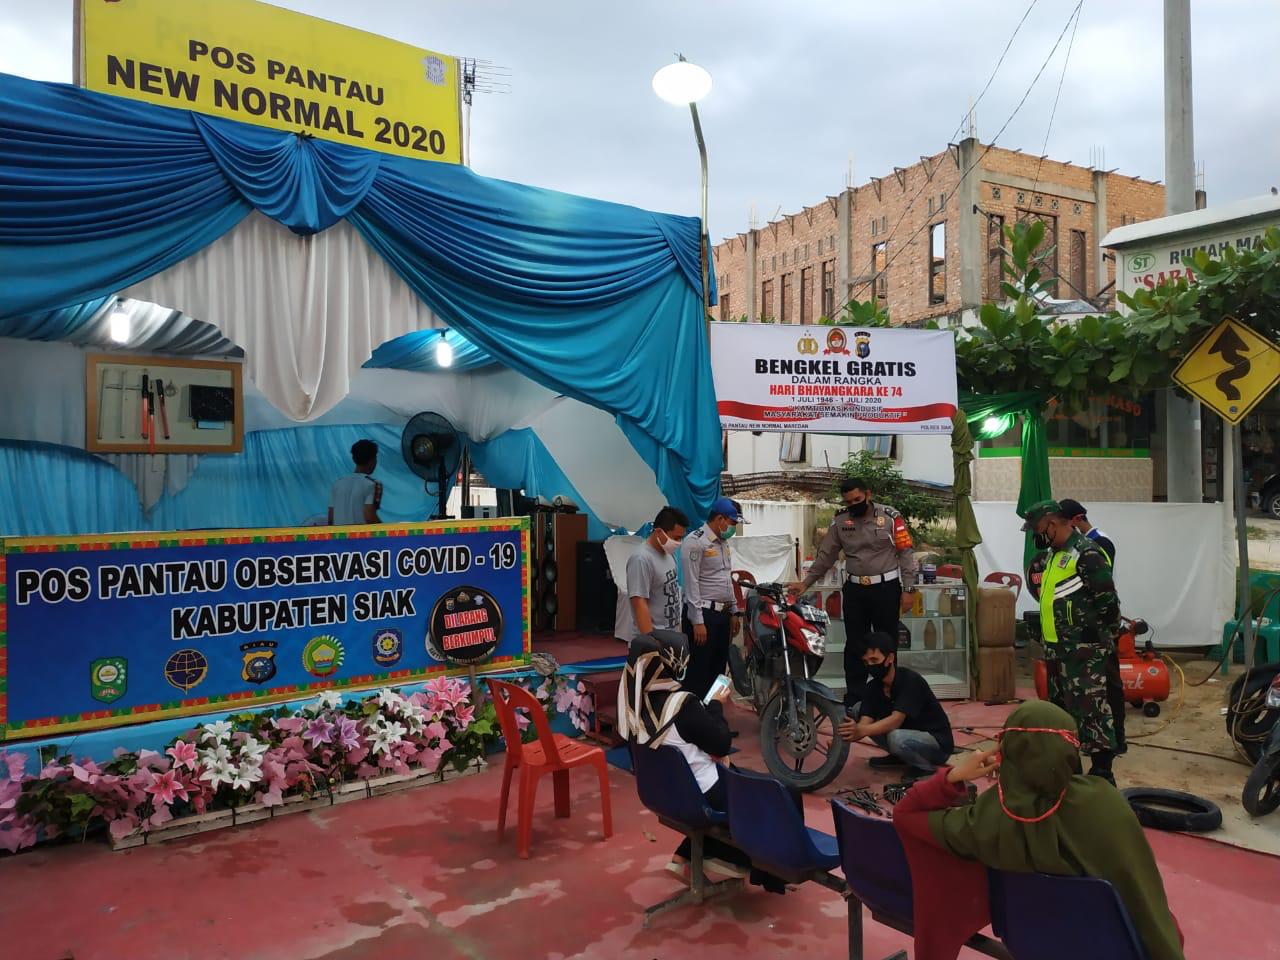 Meriahkan Hari Bhayangkara ke 74, Polres Siak Mengadakan Bengkel Gratis di Pos Pantau New Normal Kampung Tengah Maredan